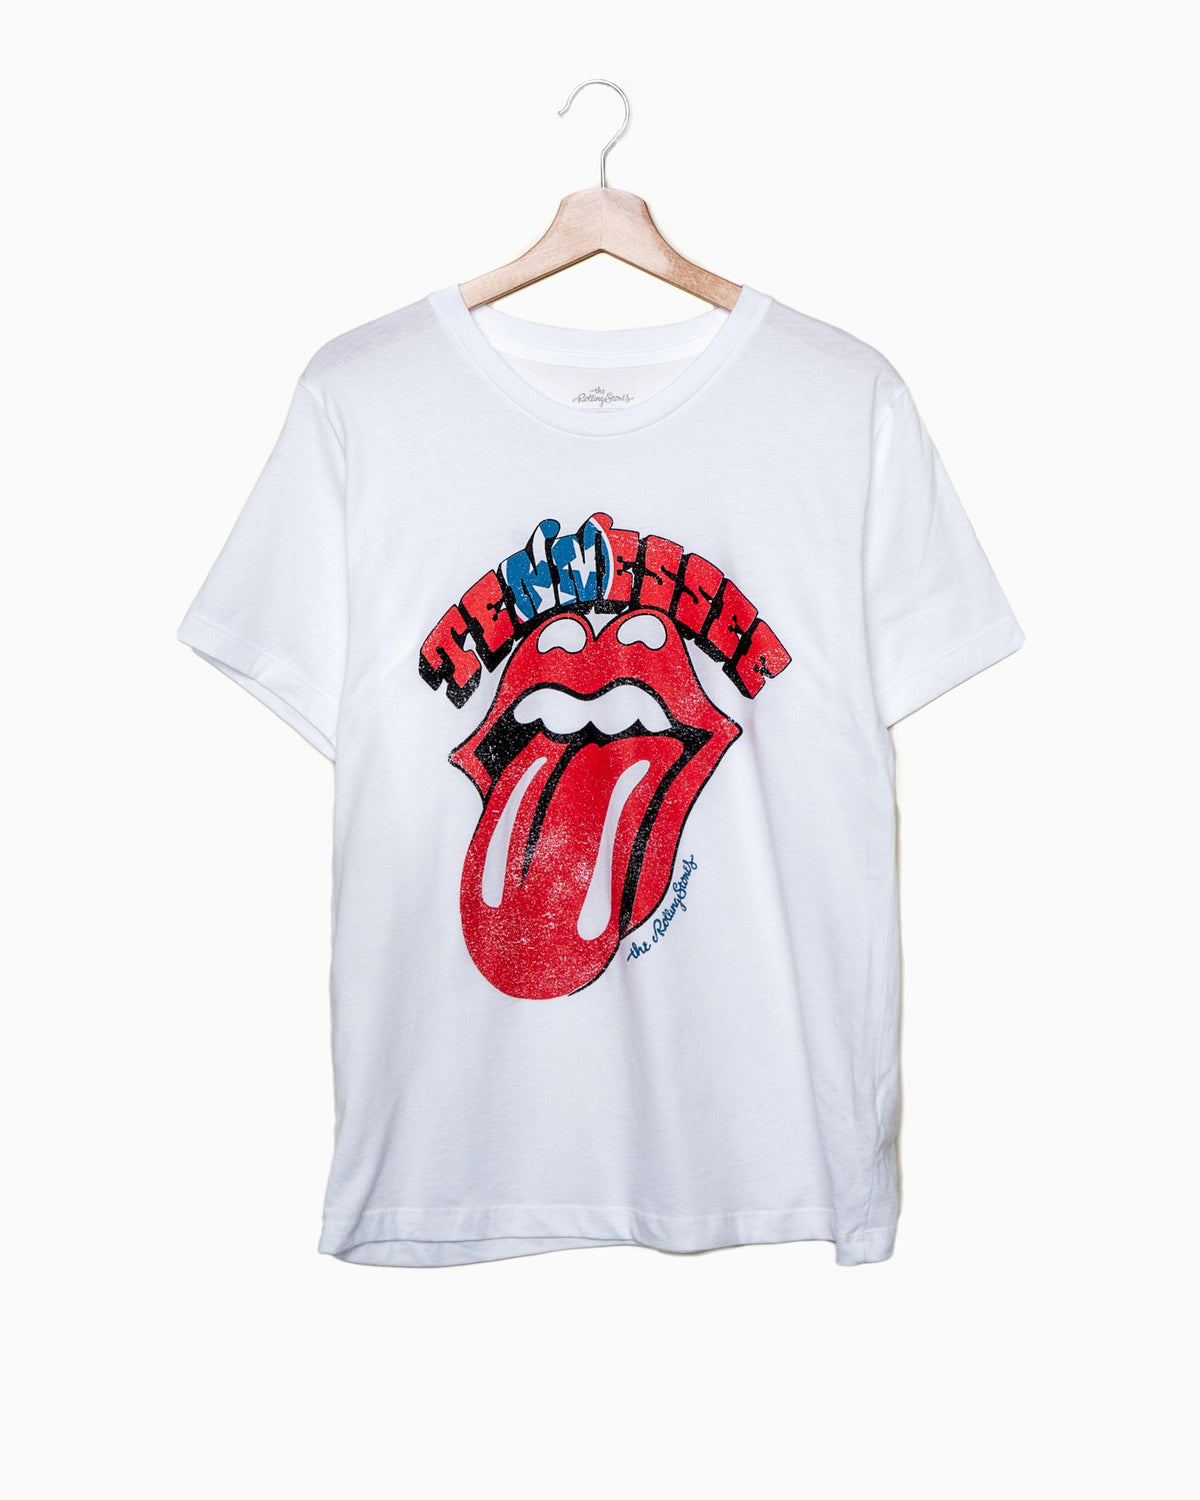 Rolling Stones Tennessee Flag Rocker White Tee - shoplivylu